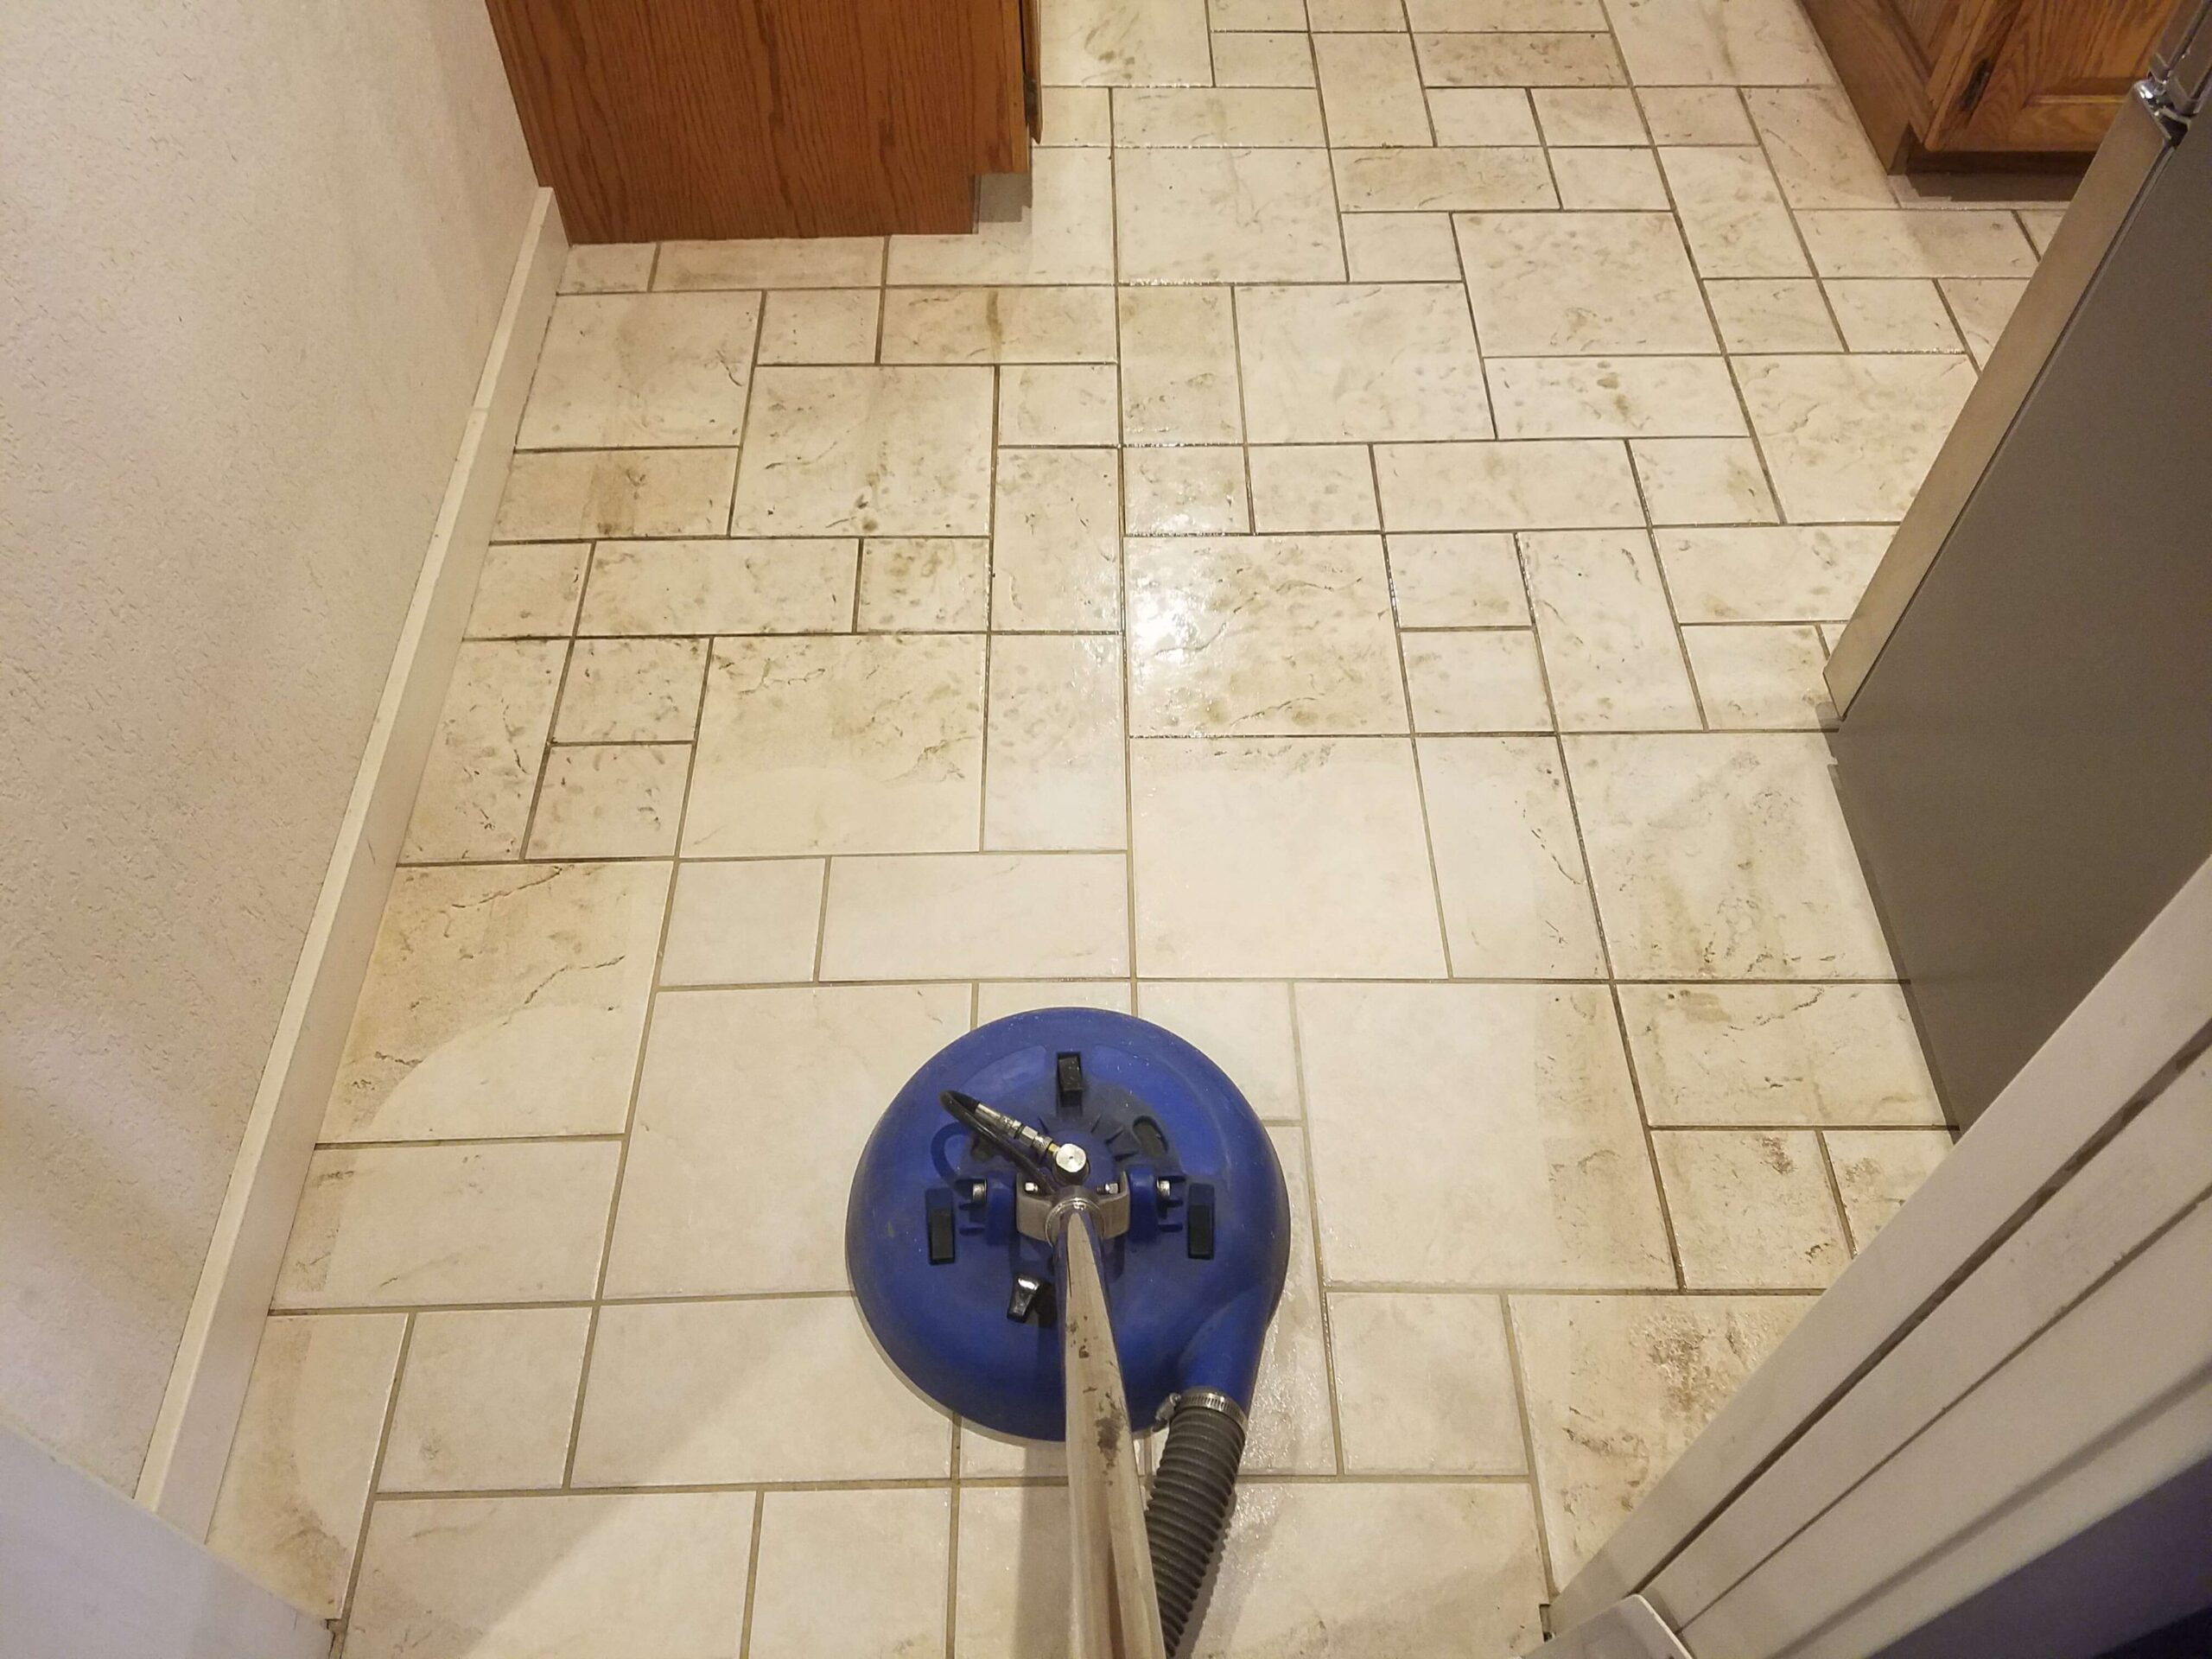 https://sacsurfacepro.com/wp-content/uploads/2016/03/Tile-Floor-Cleaning-Sacramento.jpg